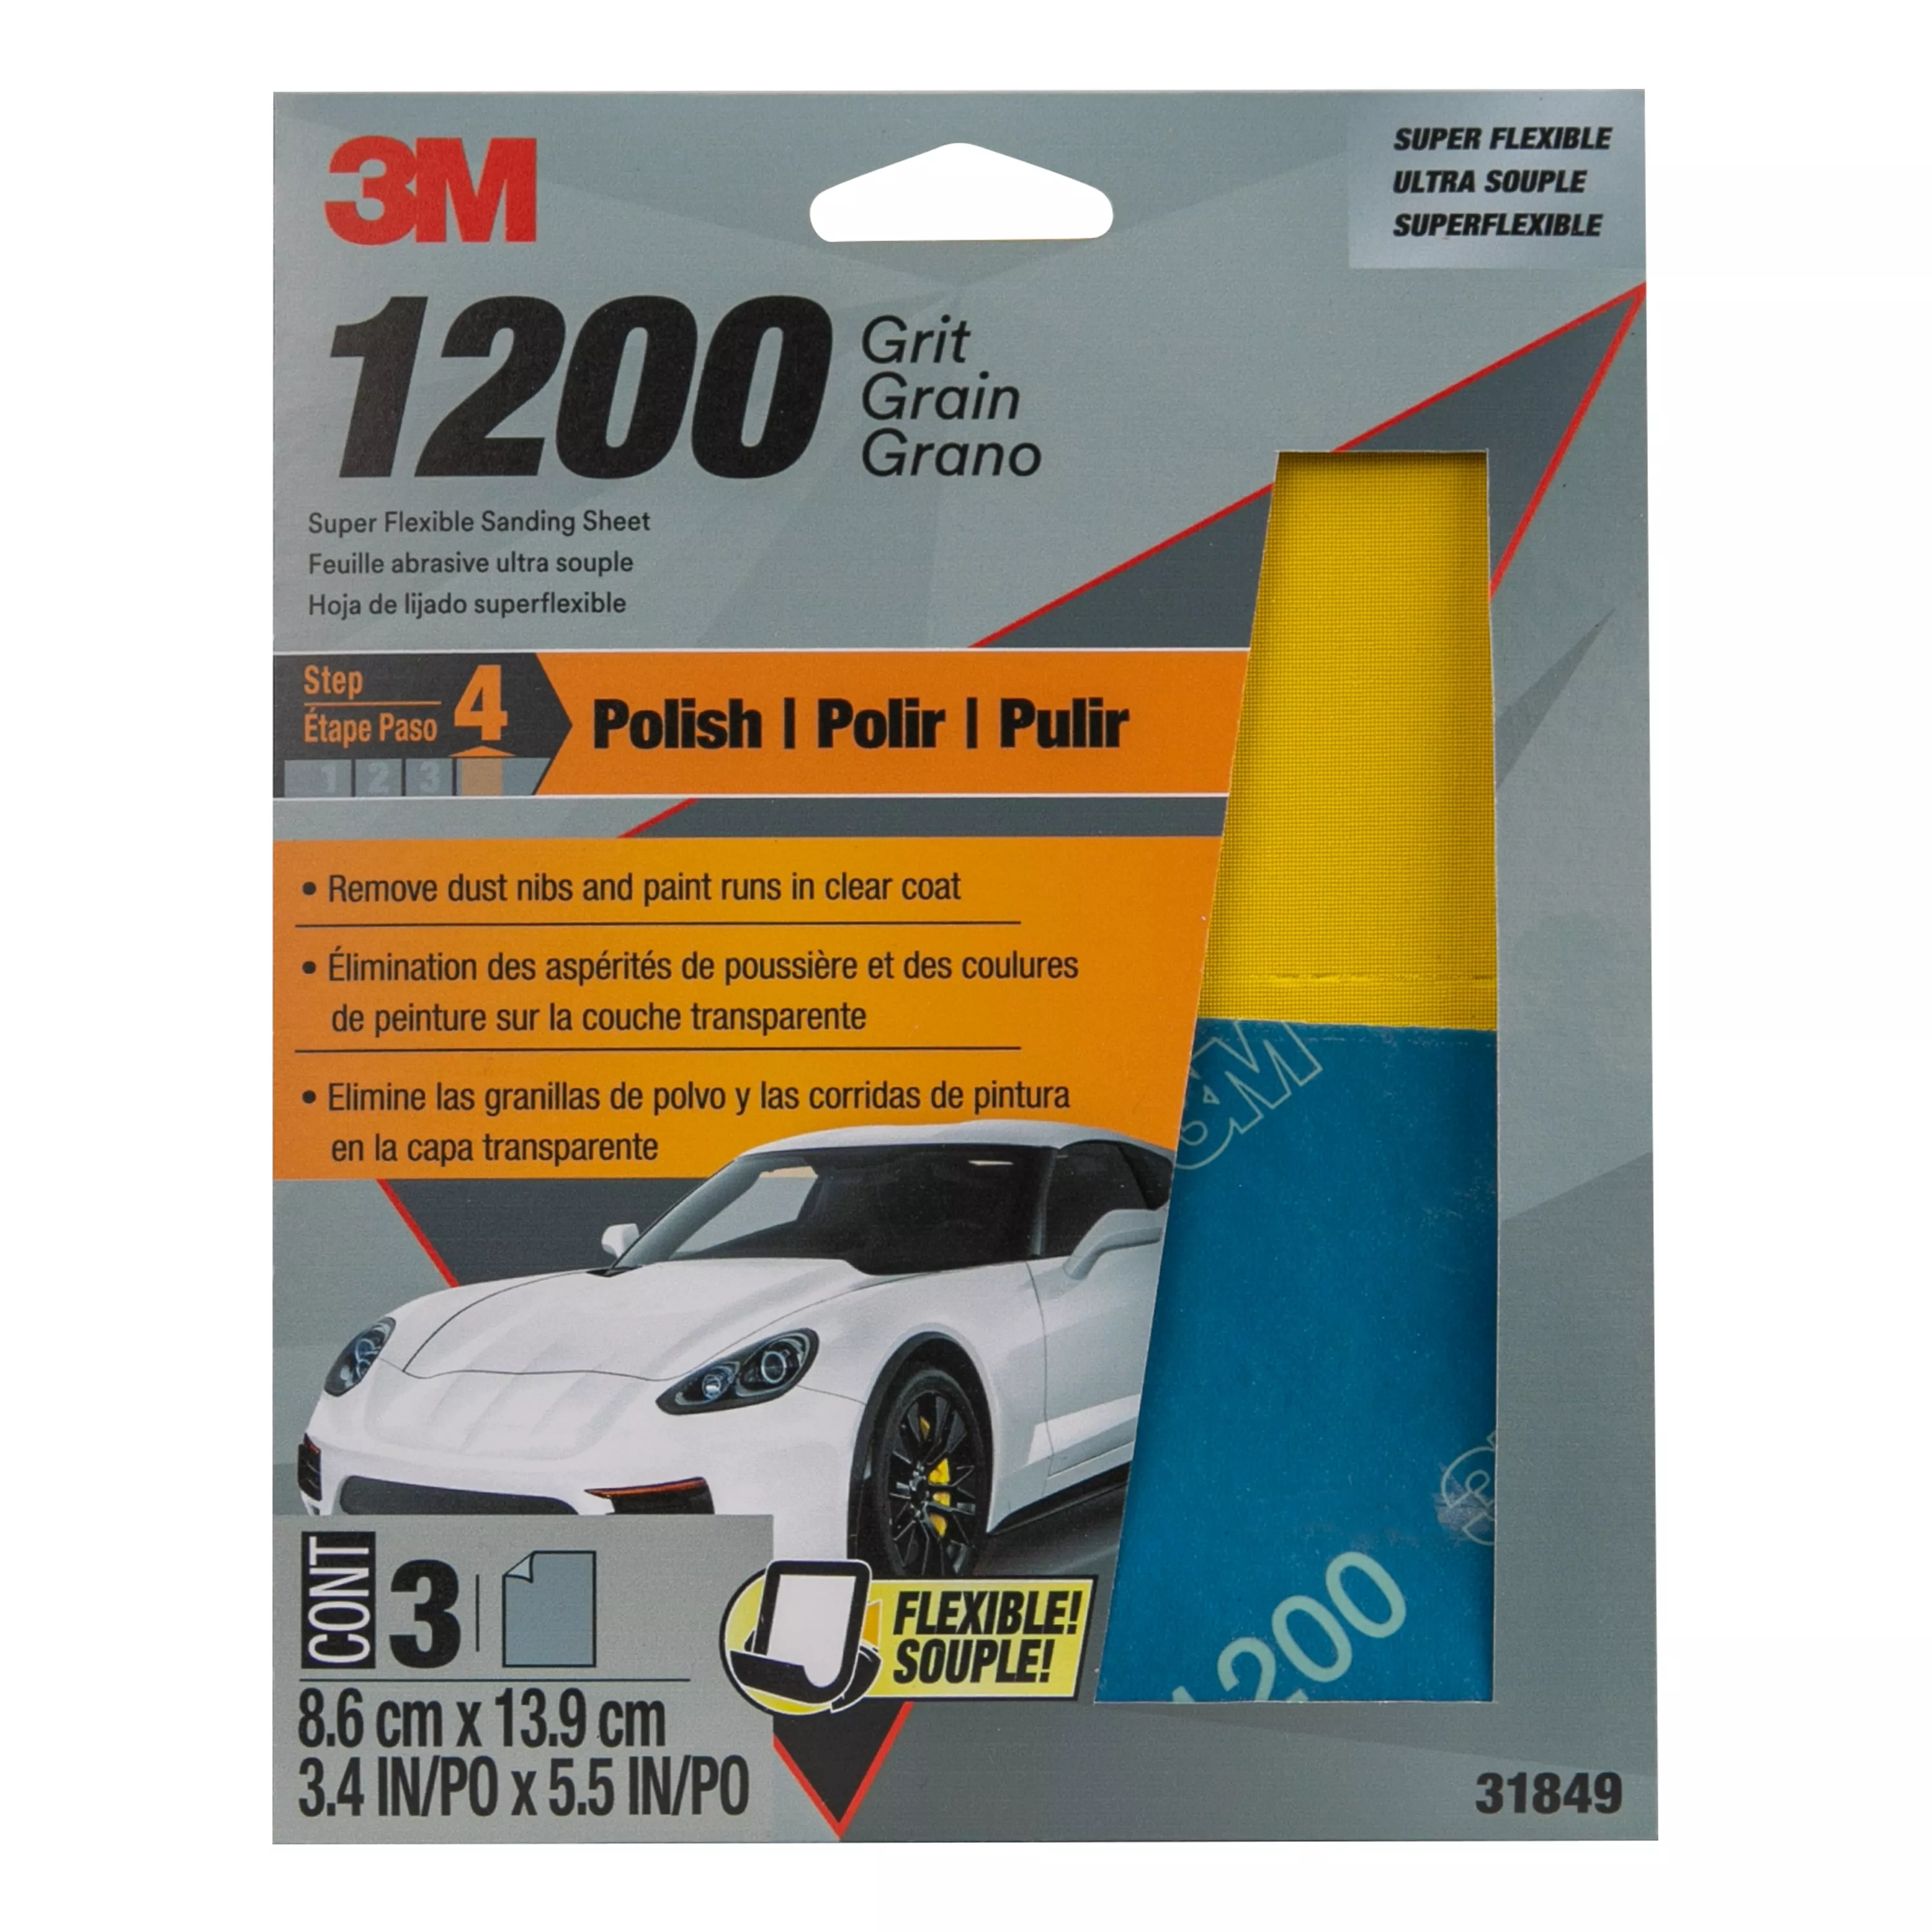 3M™ Super Flexible Sanding Sheets, 31849, 1200 Grit, 3 pack, 20 packs
per case